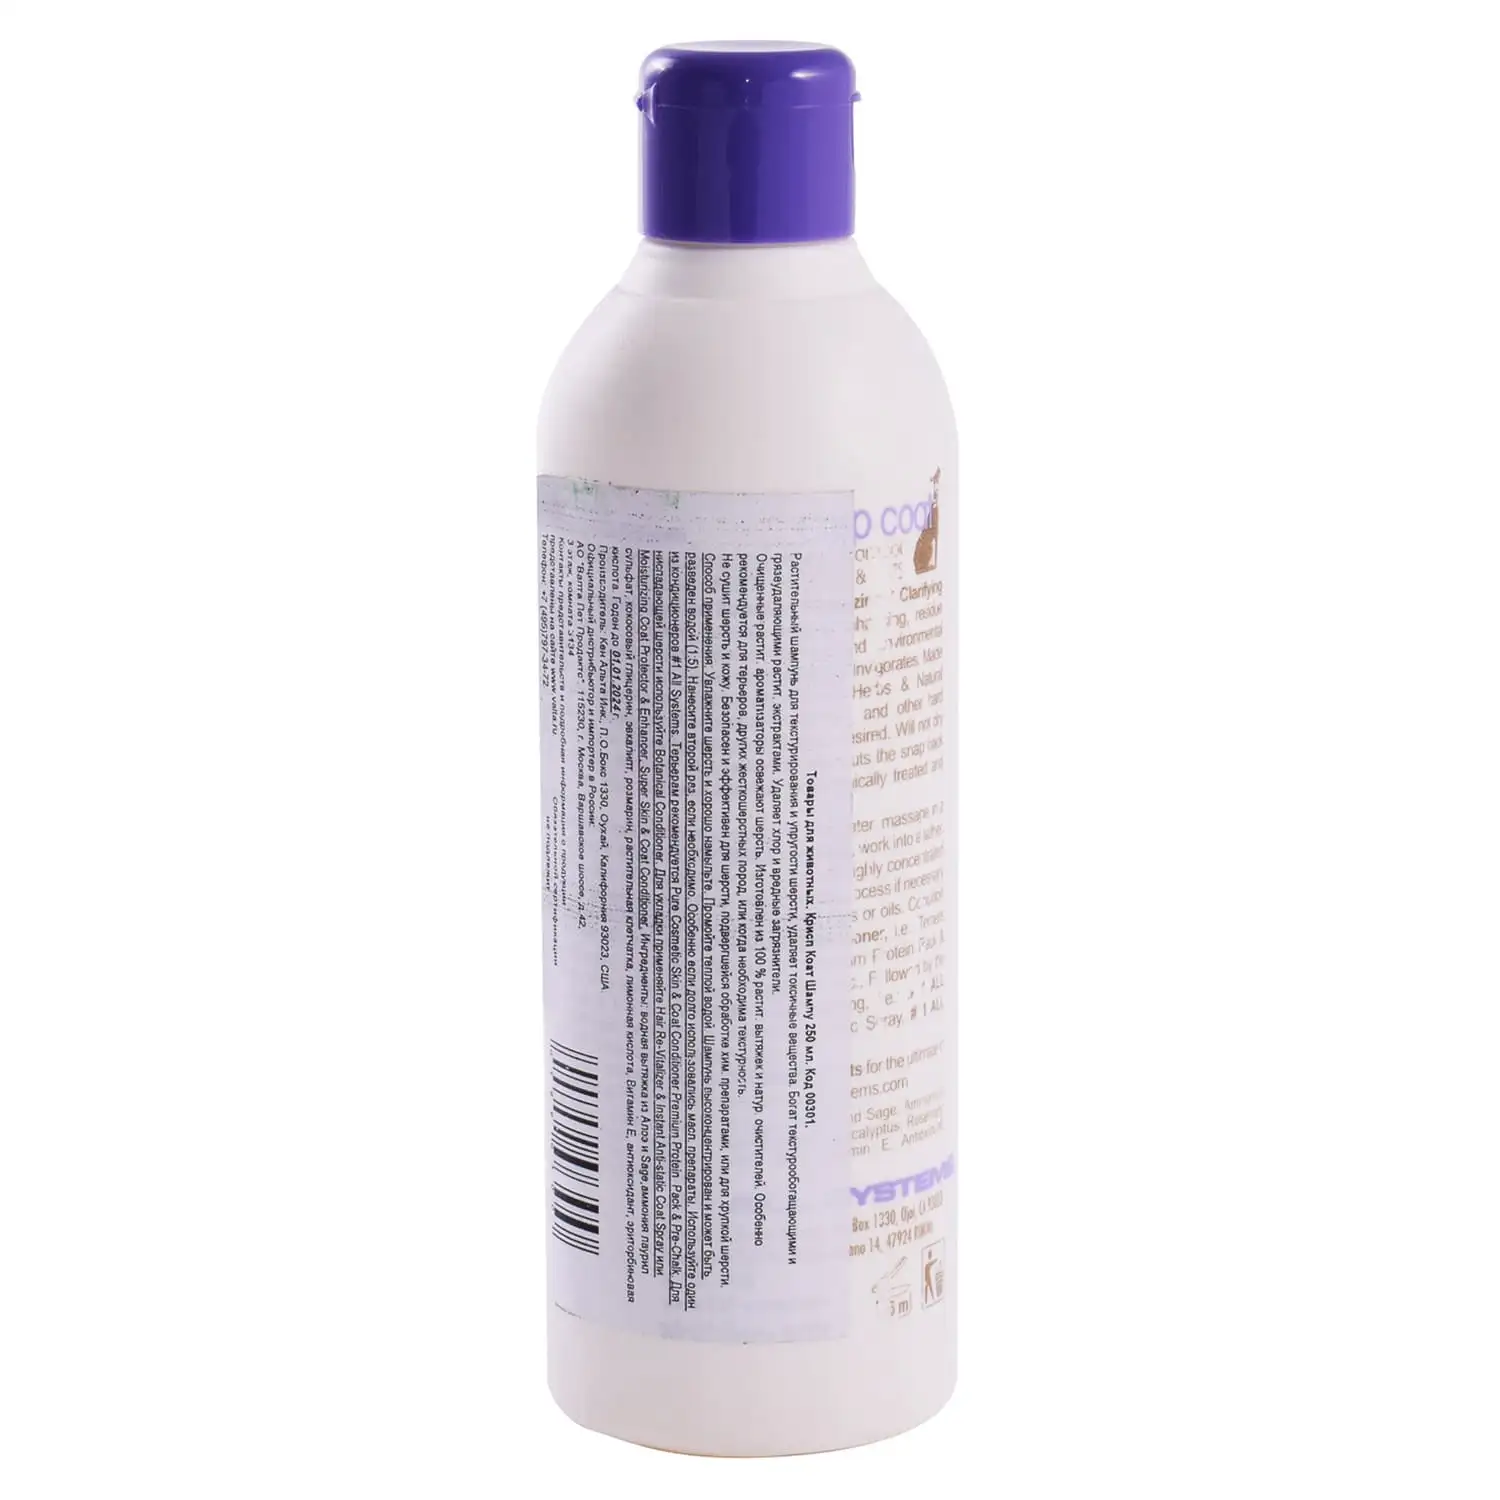 1 All Systems Crisp coat Shampoo шампунь для жесткой шерсти 250 мл